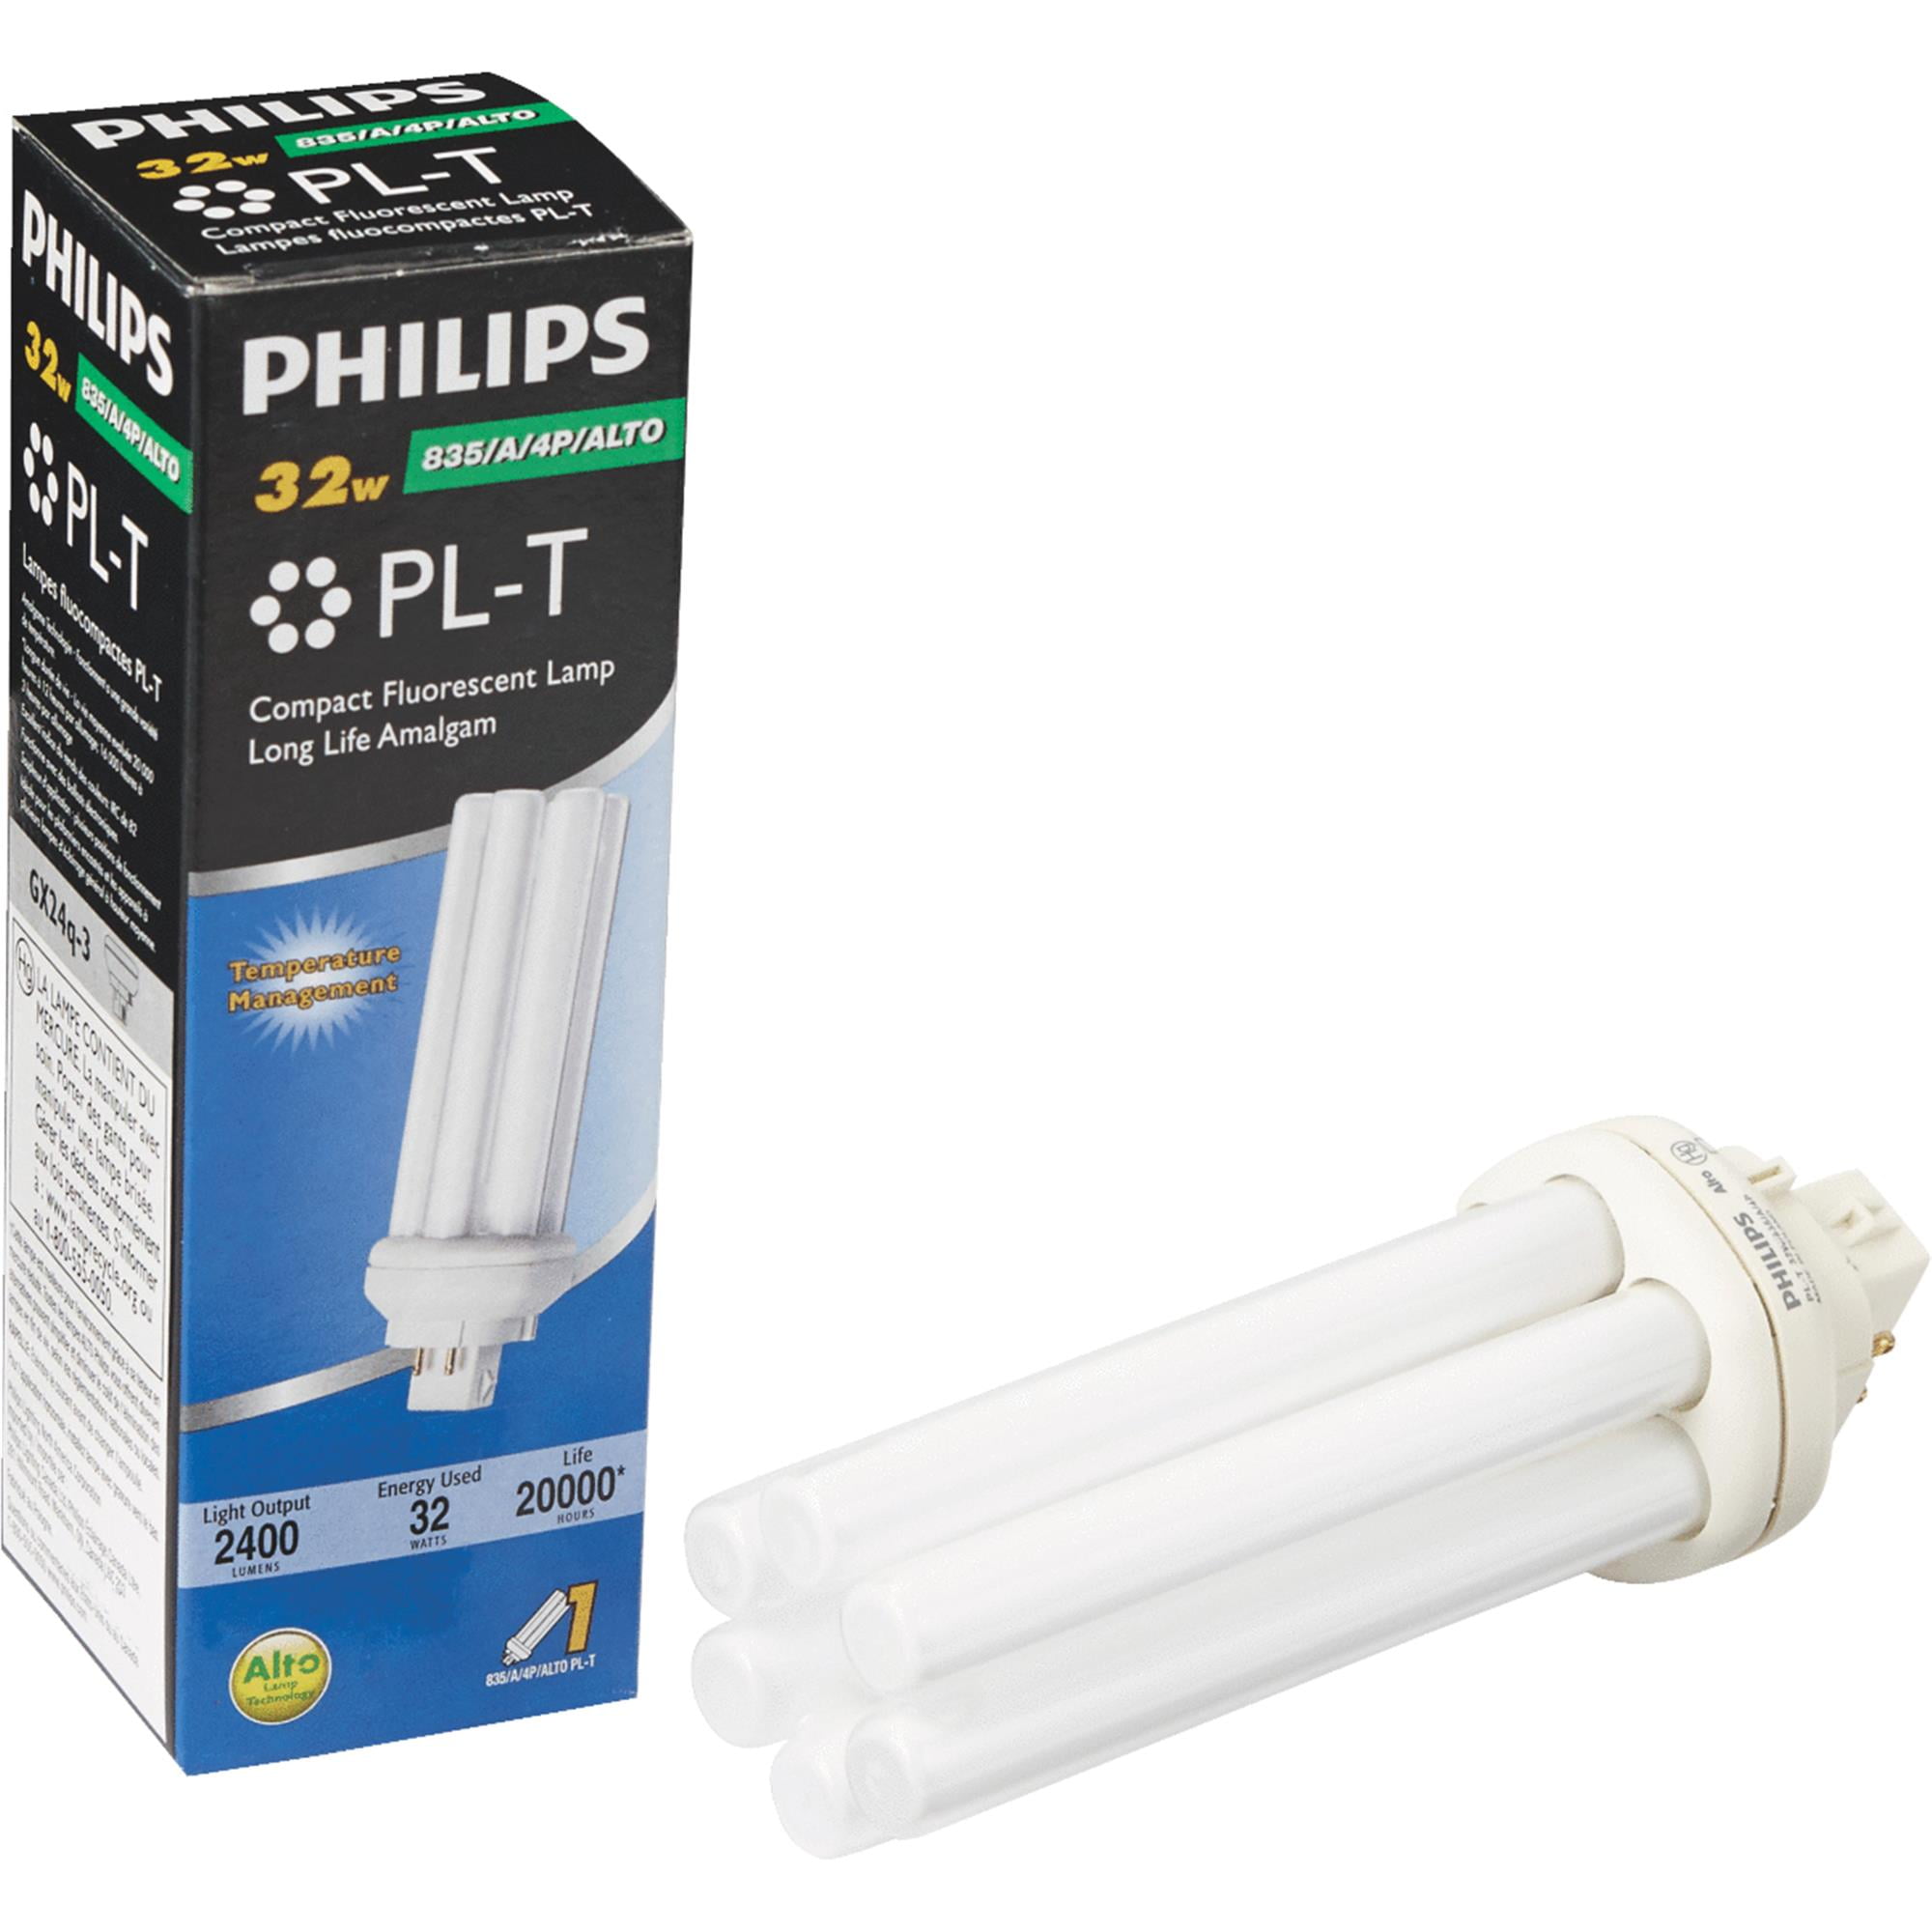 NEW Philips 835/A/4P/ALTO 42W PL-T Compact Fluorescent Lamp GX24q-4 4-Pin 